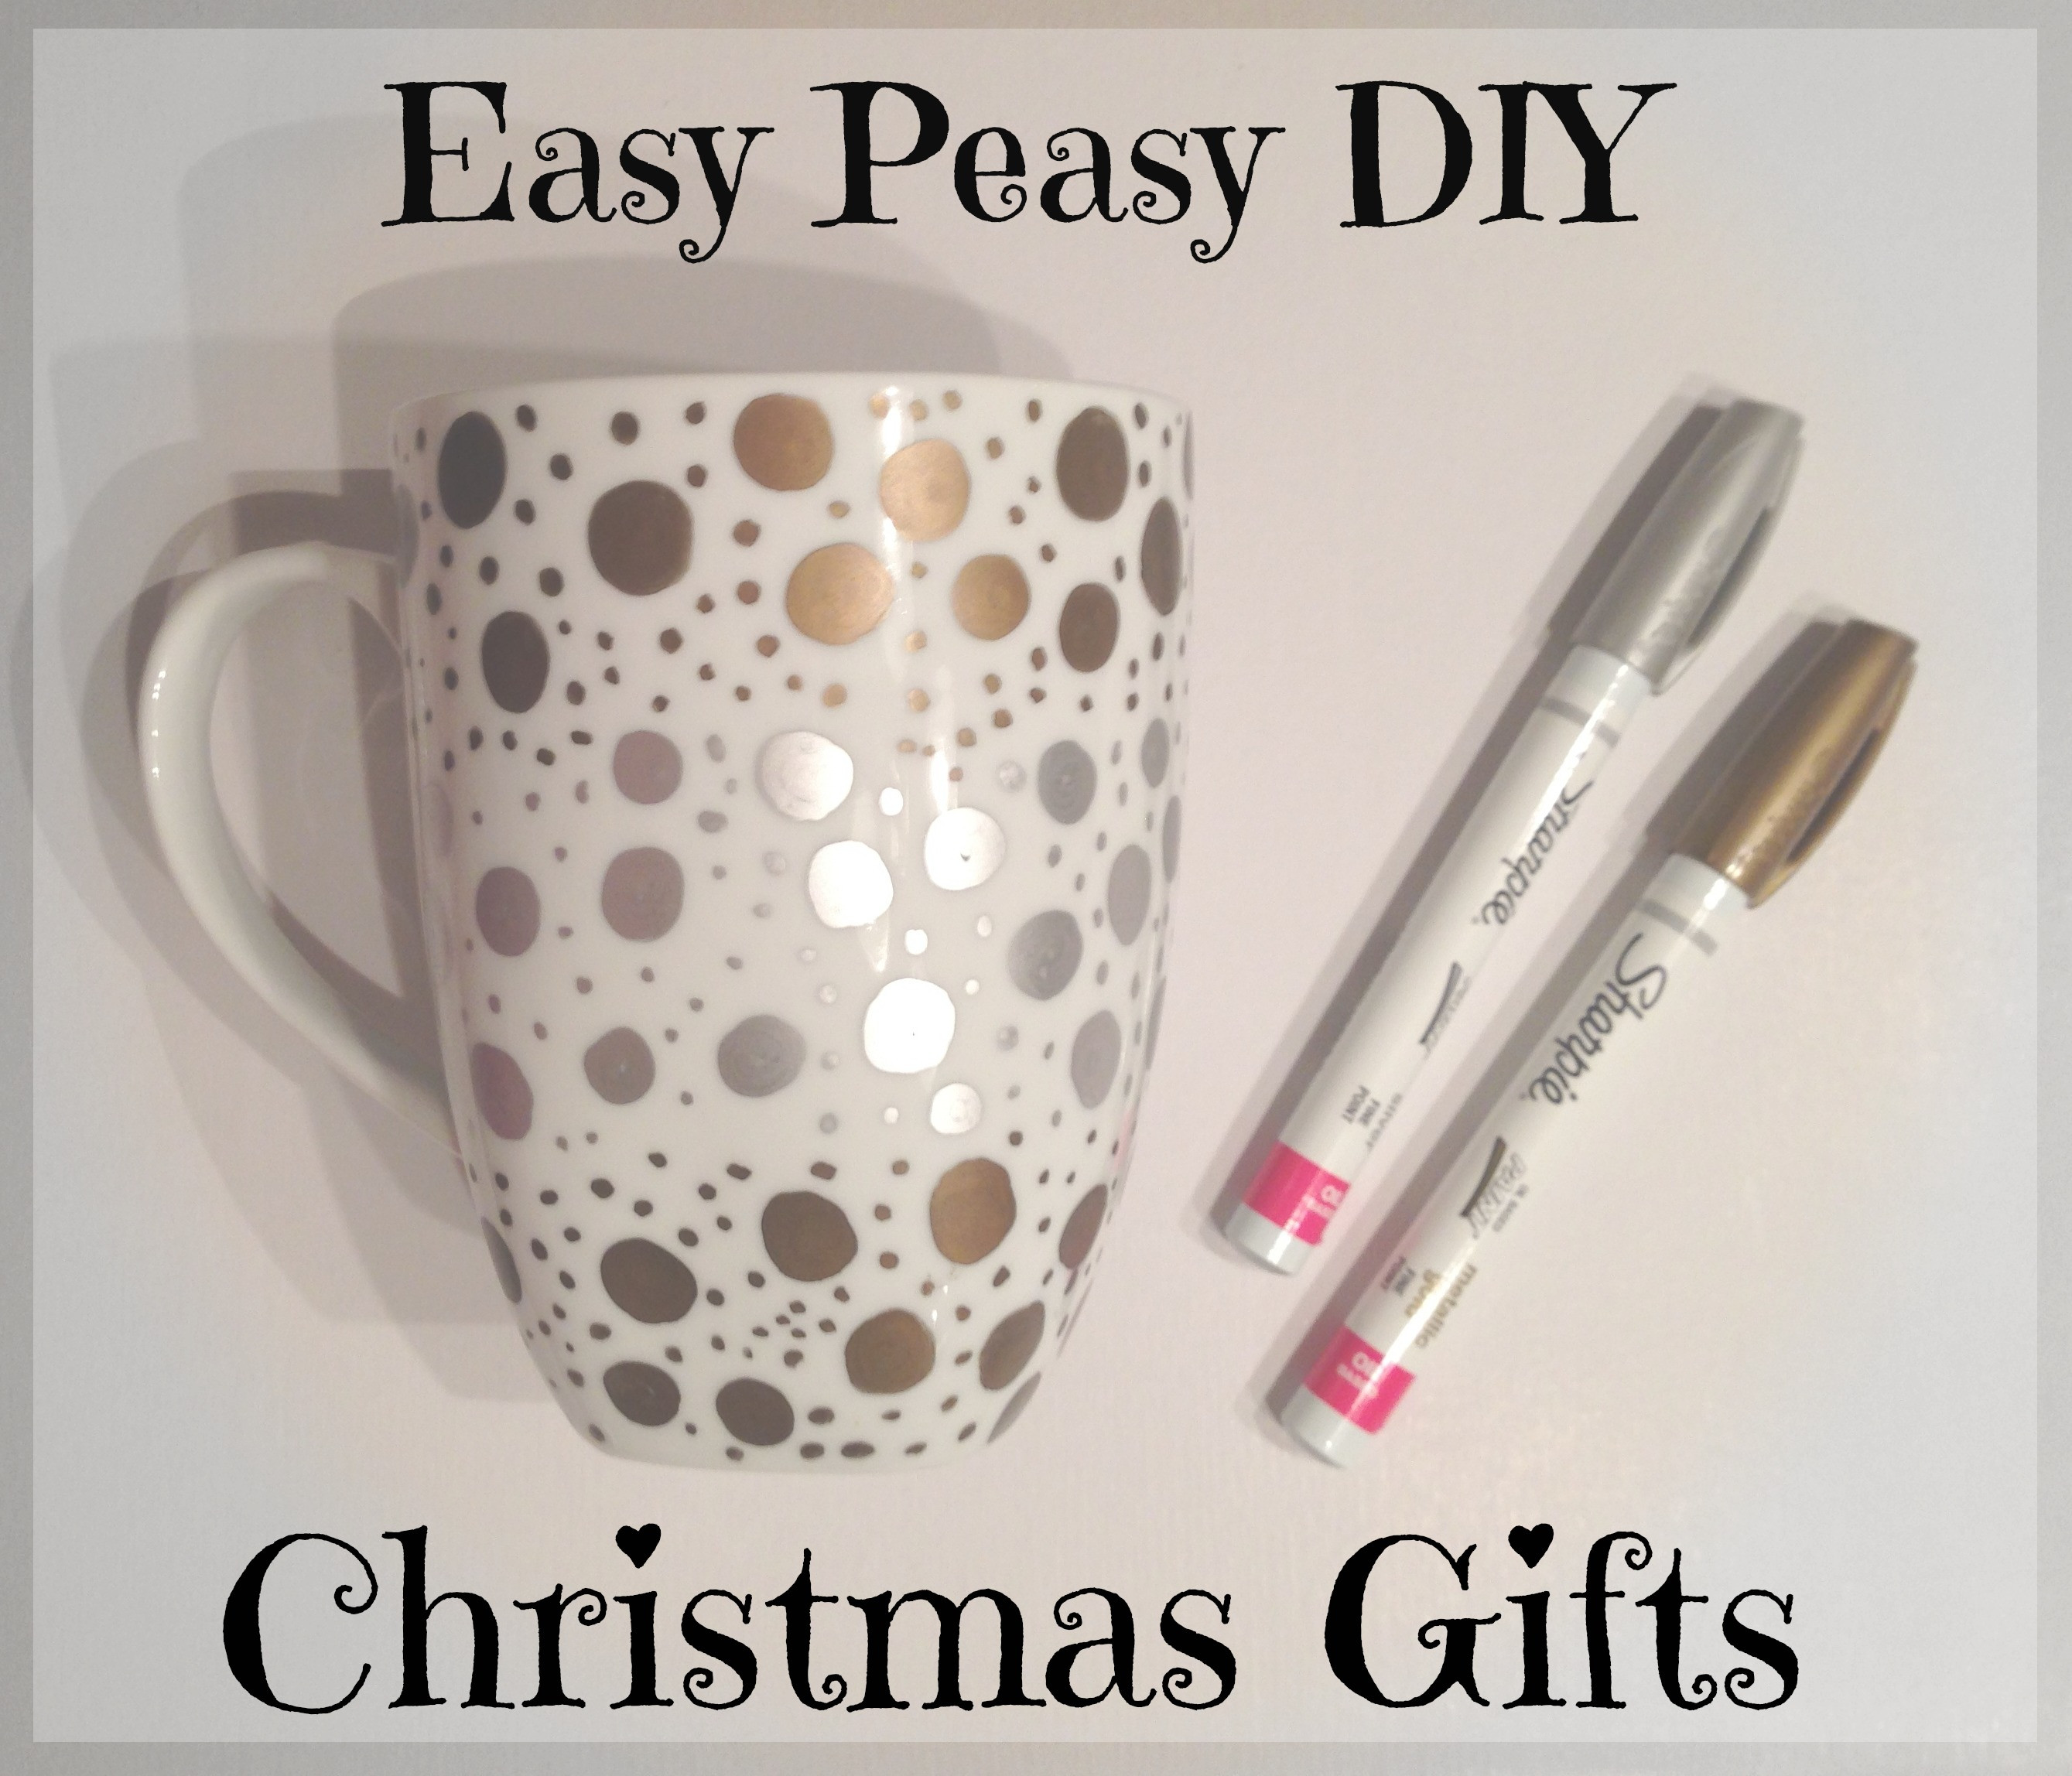 DIY Gifts For Christmas
 Homemade Christmas ts for relatives ideas easy mom